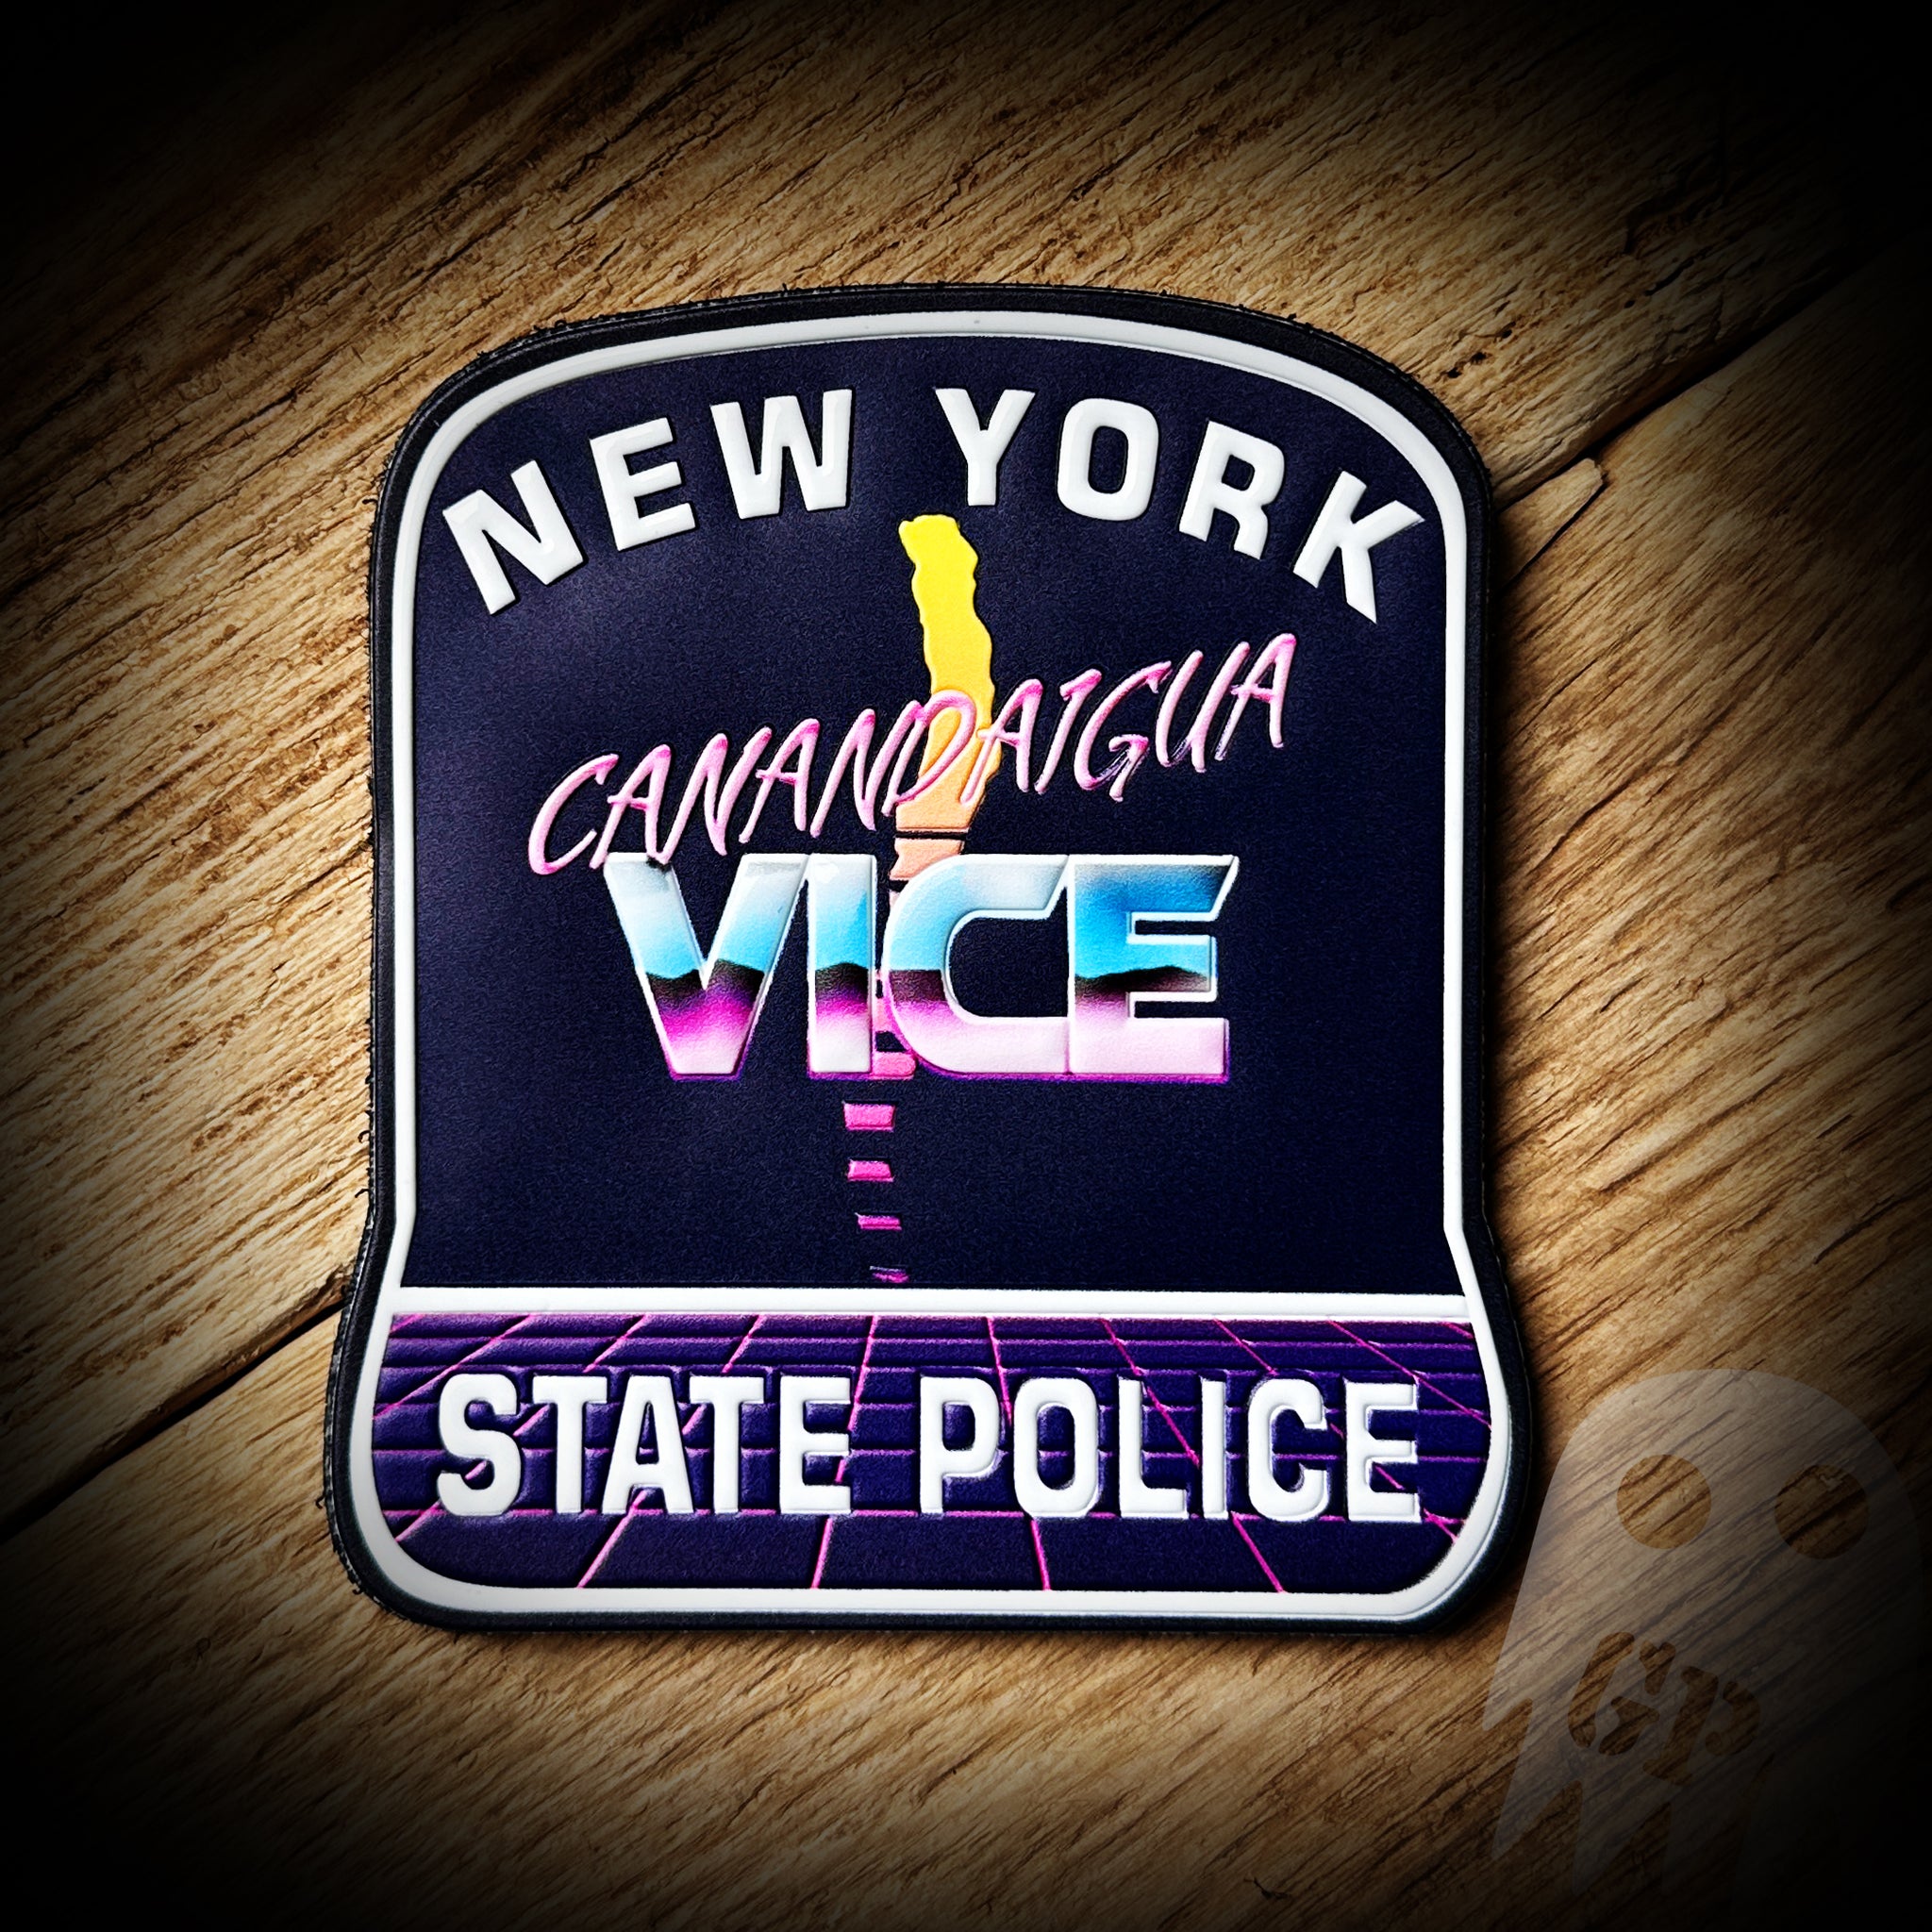 VICE - New York State Police Vice Unit XGP Patch